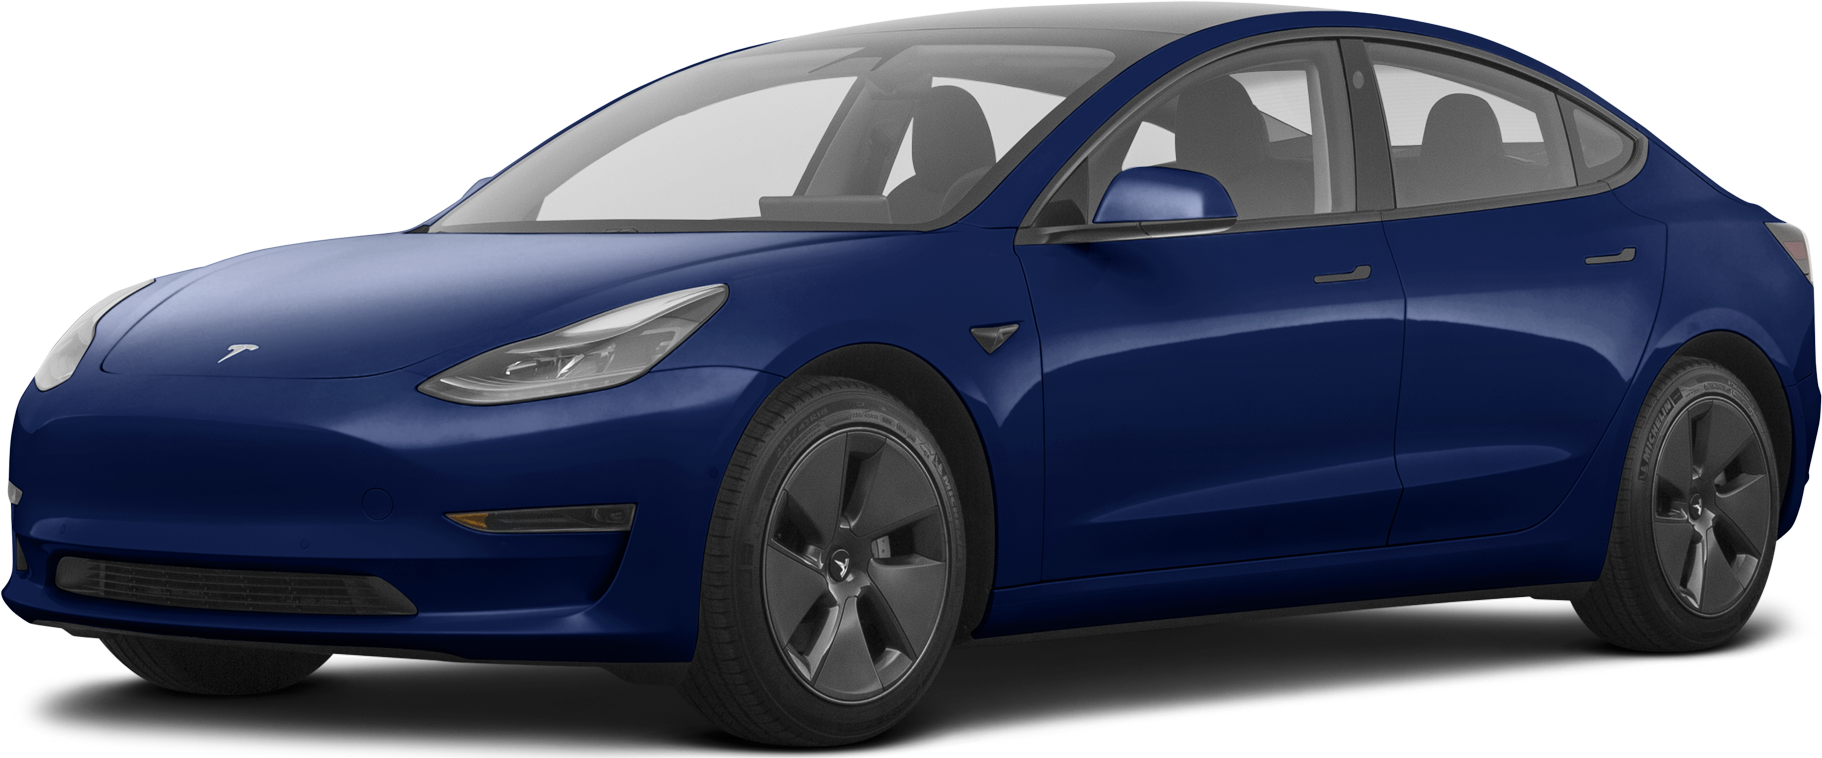 Aero-Wheels from Tesla reduce consumption by three percent